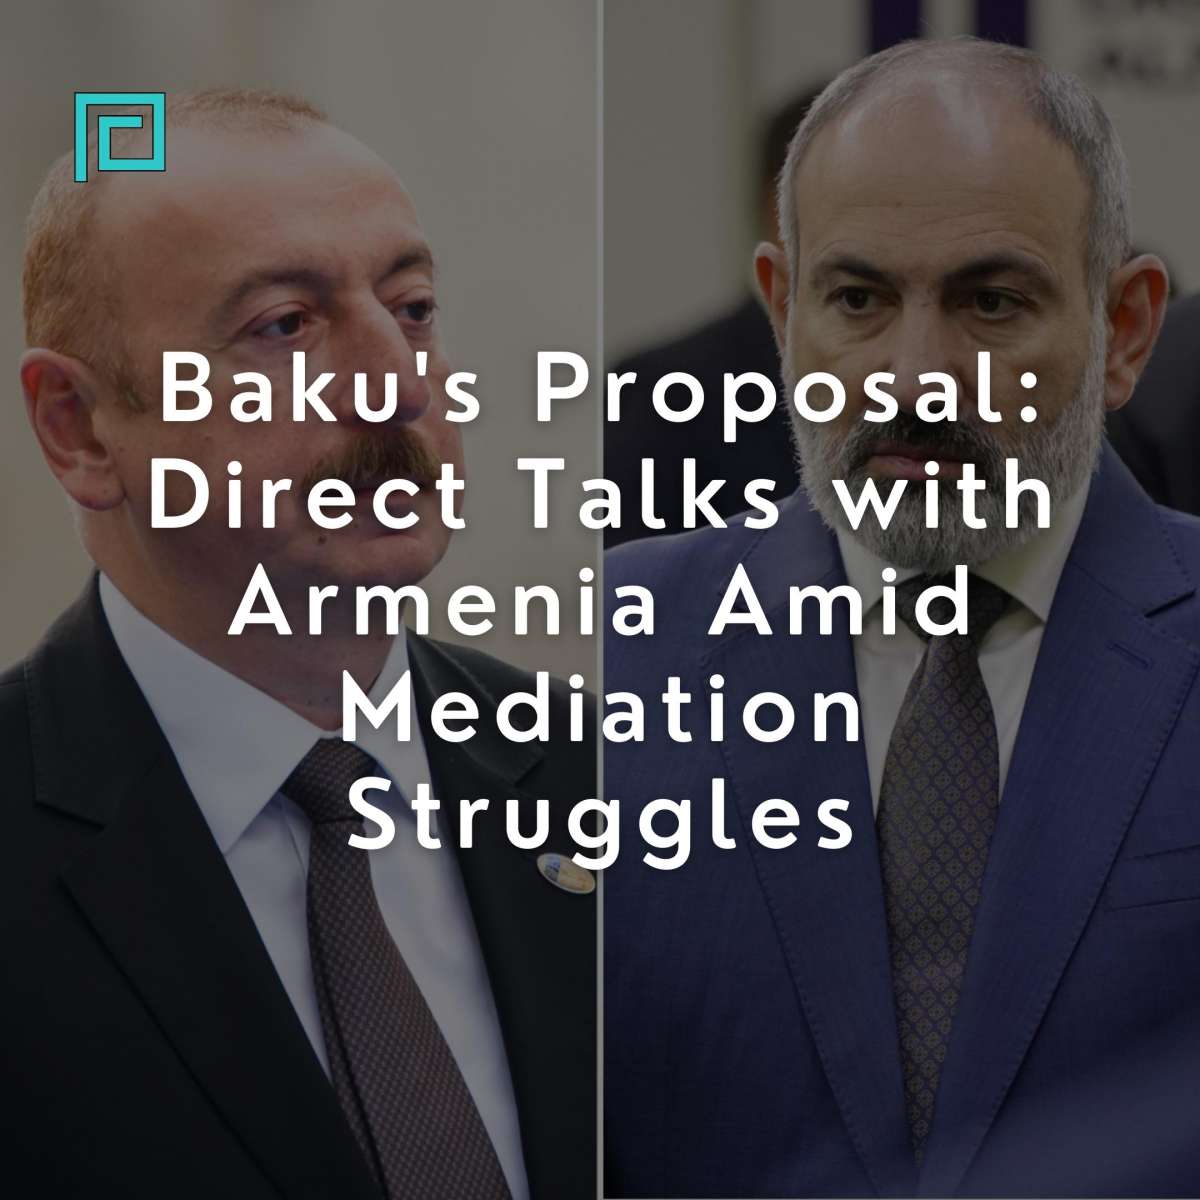 Baku's Proposal: Direct Talks with Armenia Amid Mediation Struggles